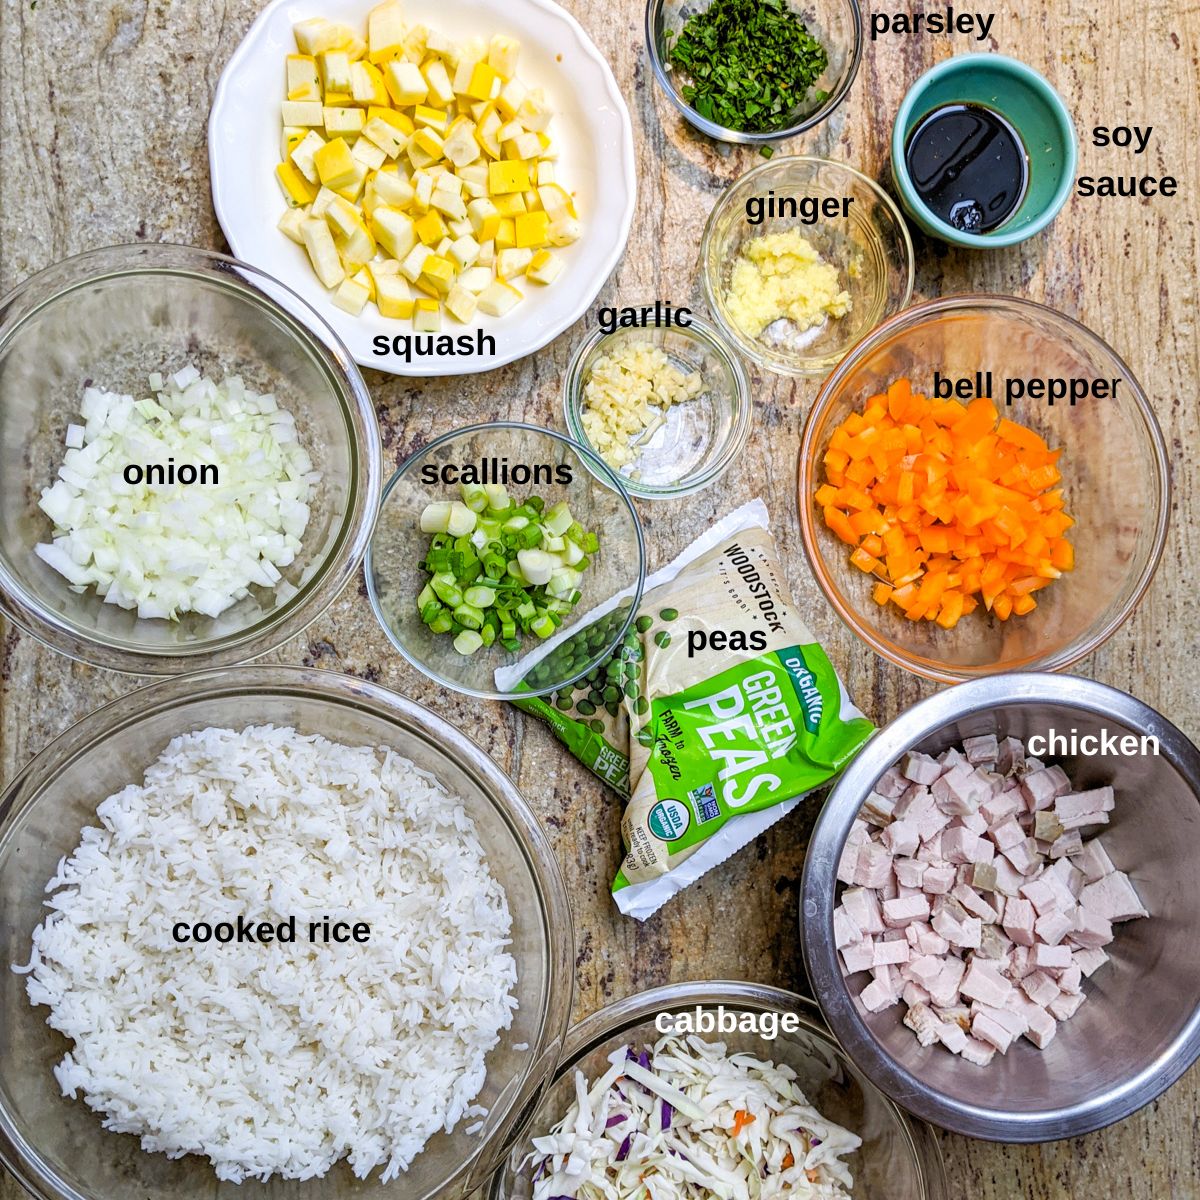 Ingredients to make chicken fried rice.